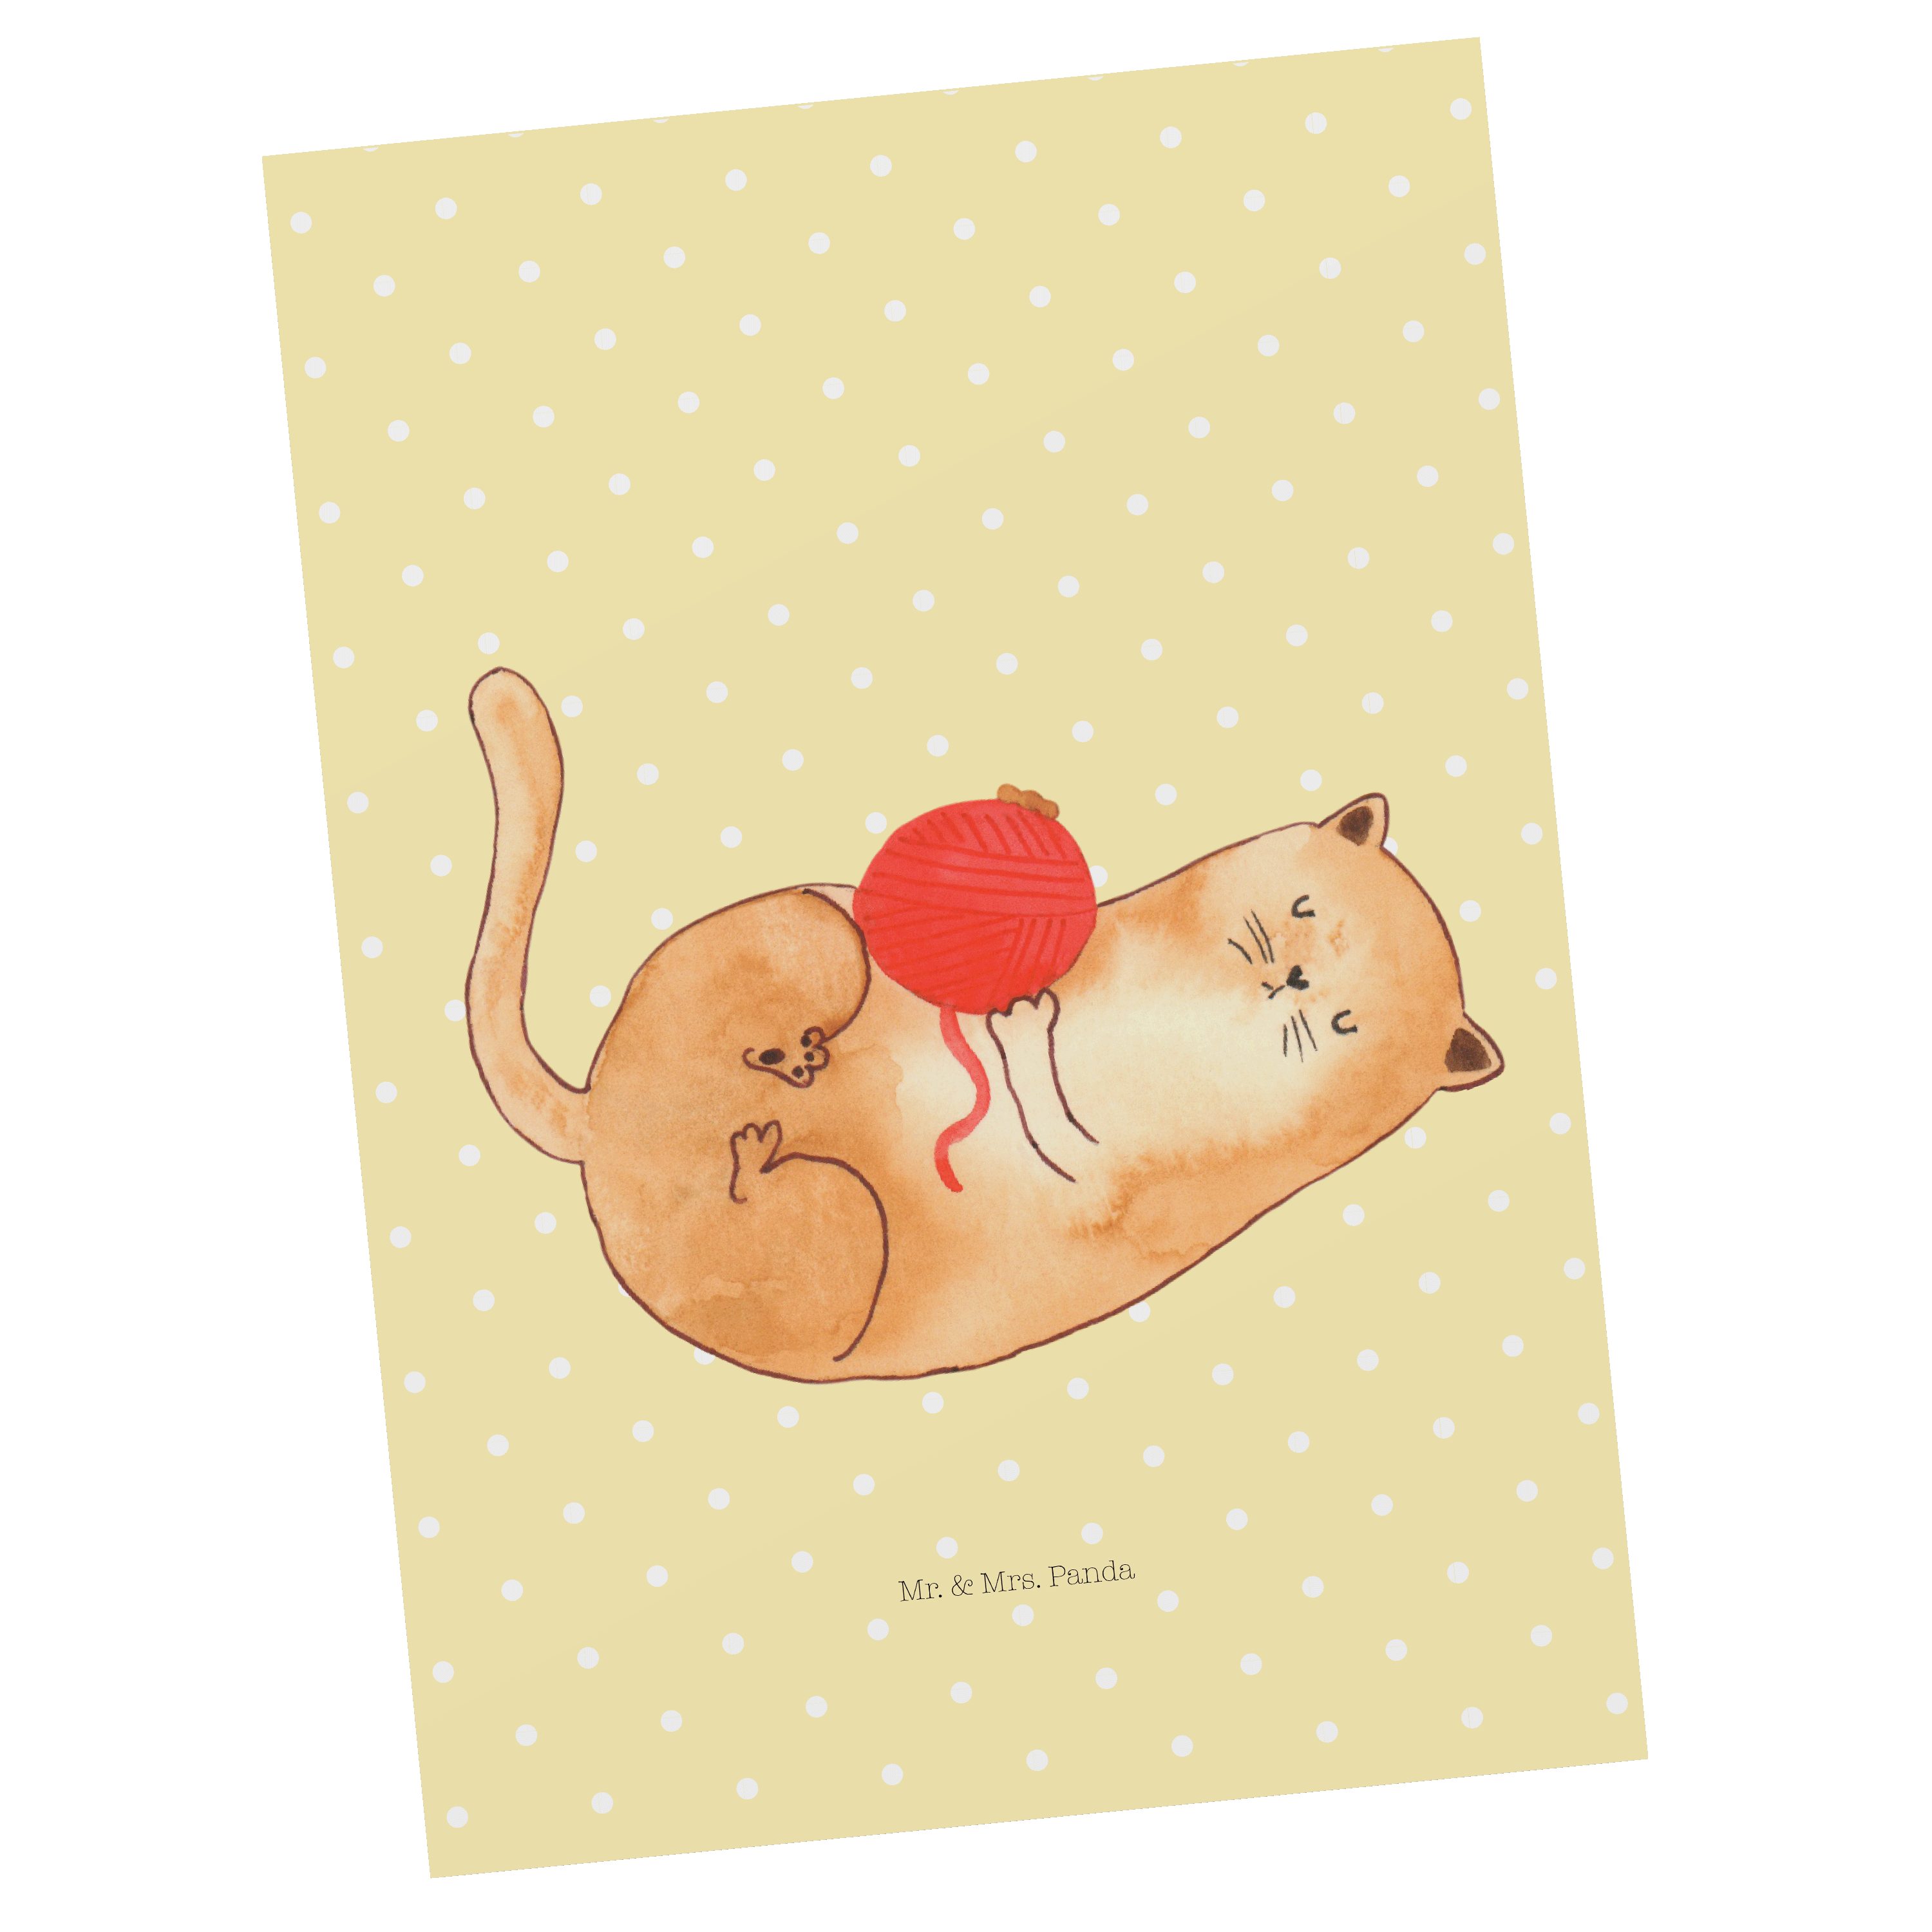 Mr. & Mrs. Panda Postkarte Katzen Wollknäul - Gelb Pastell - Geschenk, Geschenkkarte, Ansichtska